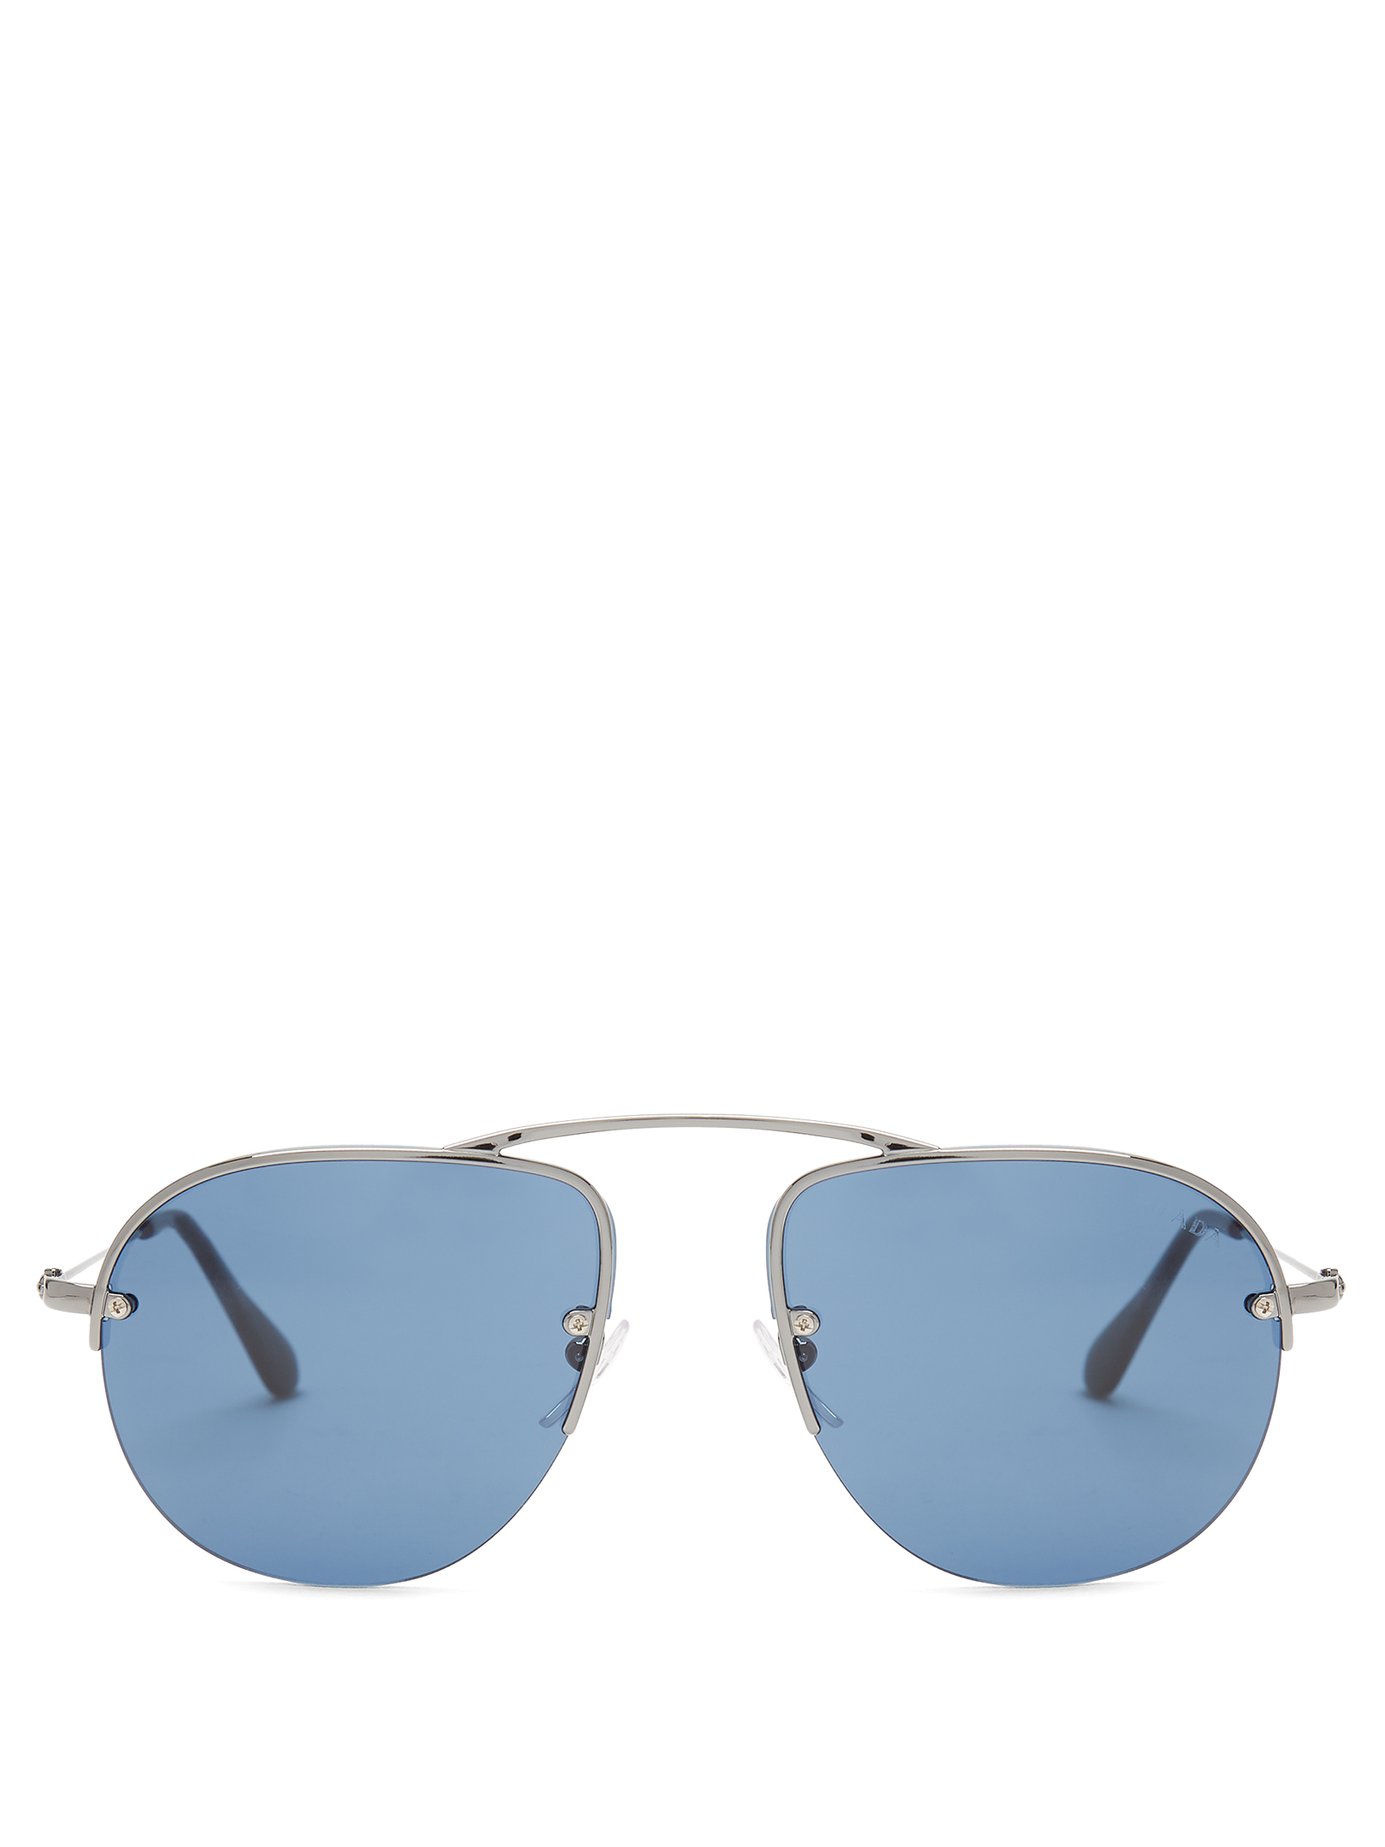 Tinted aviator sunglasses, $263